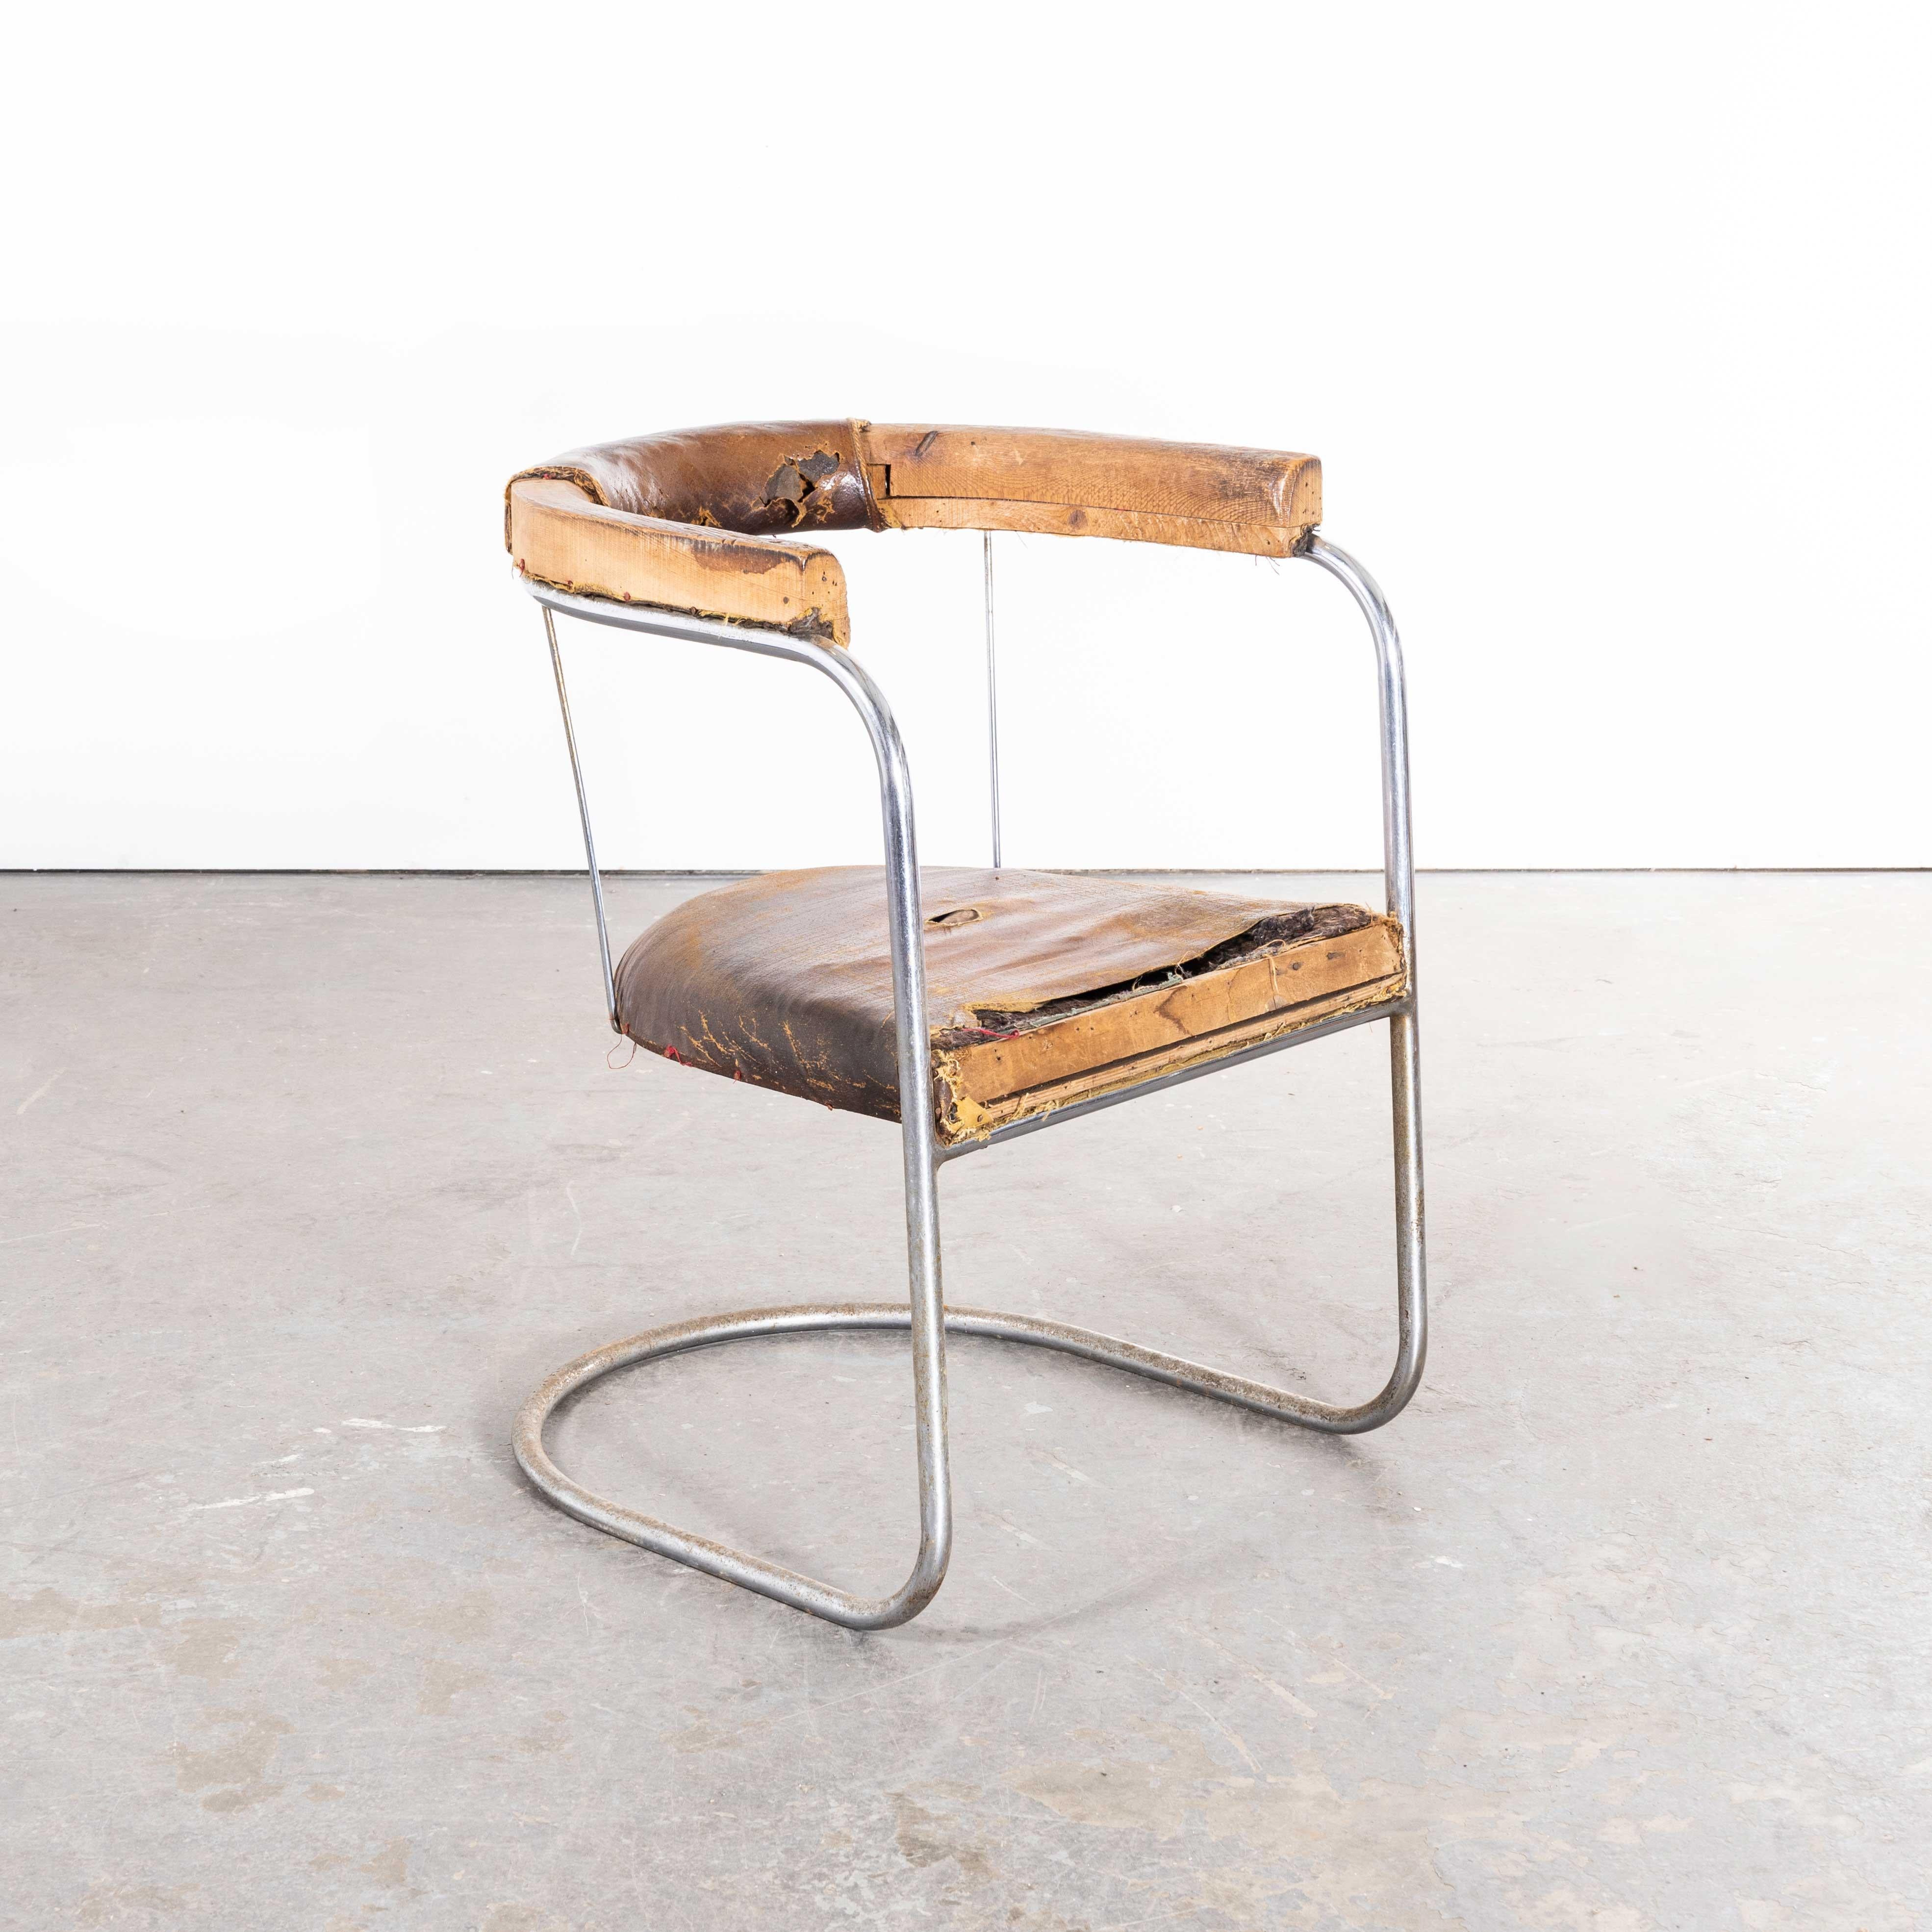 1930s Original Pel Tubular Chrome Sprung Side Chair – Original Leather For Sale 3